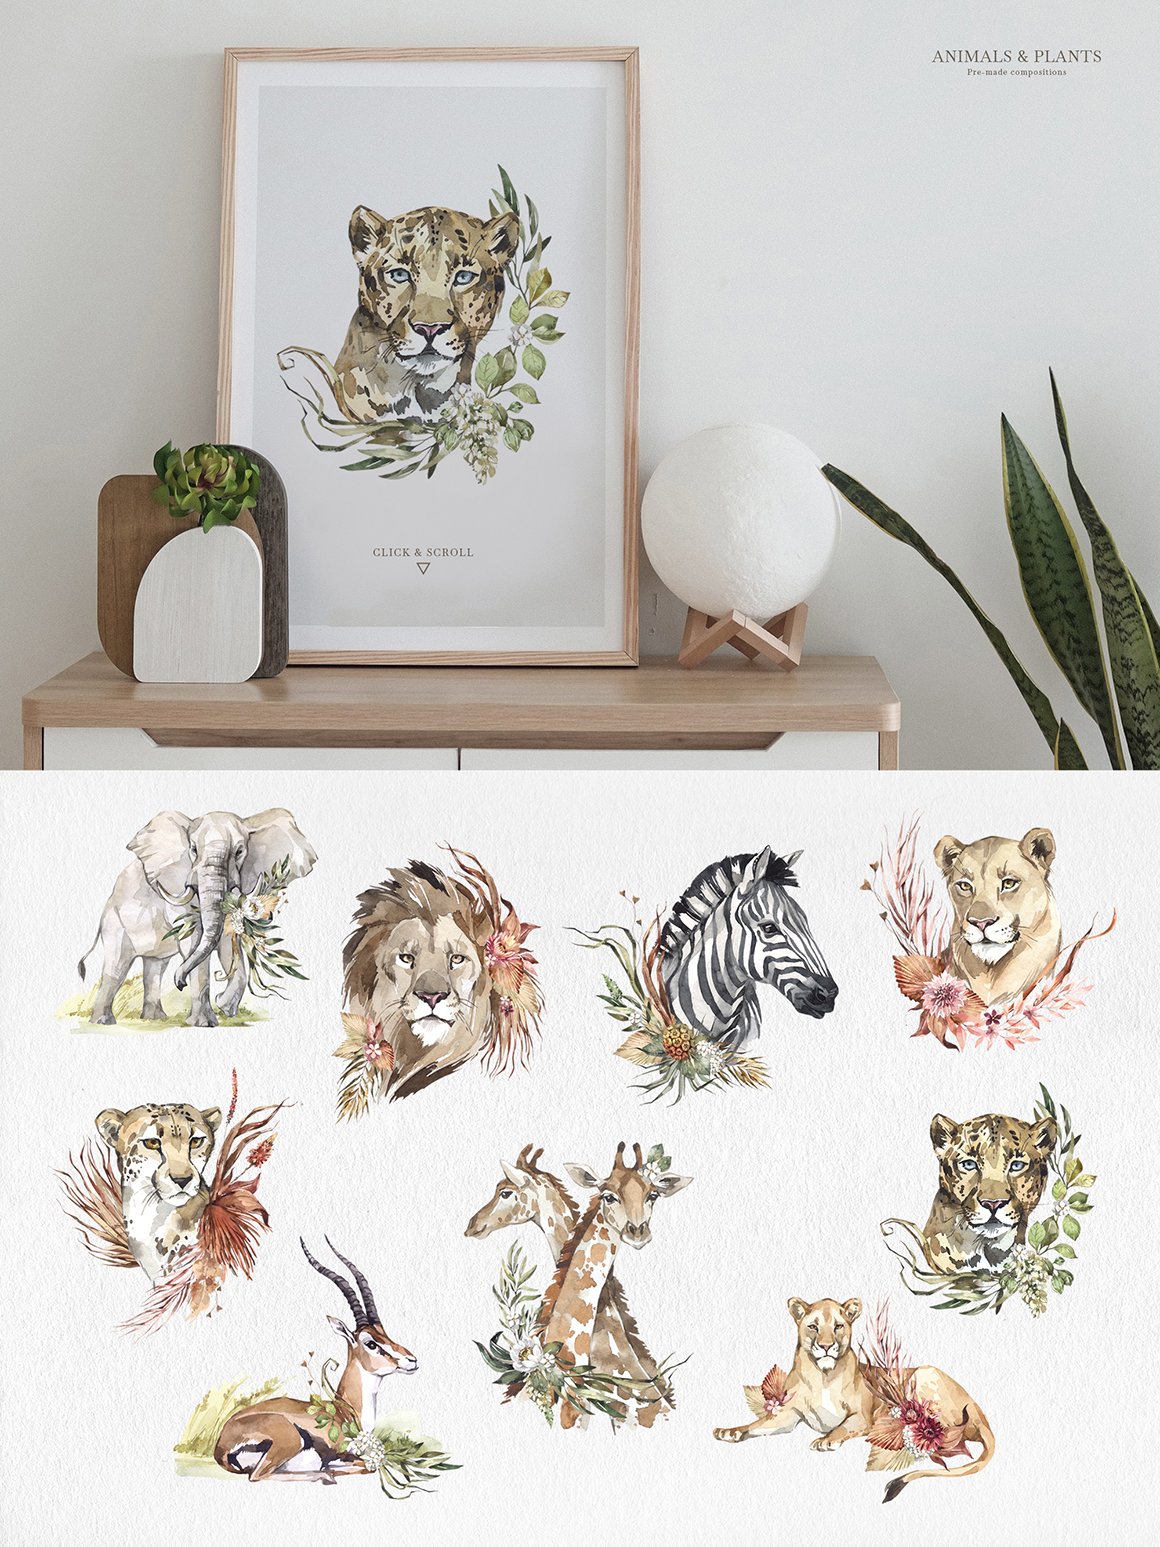 Savanna - Watercolor Animals Collection